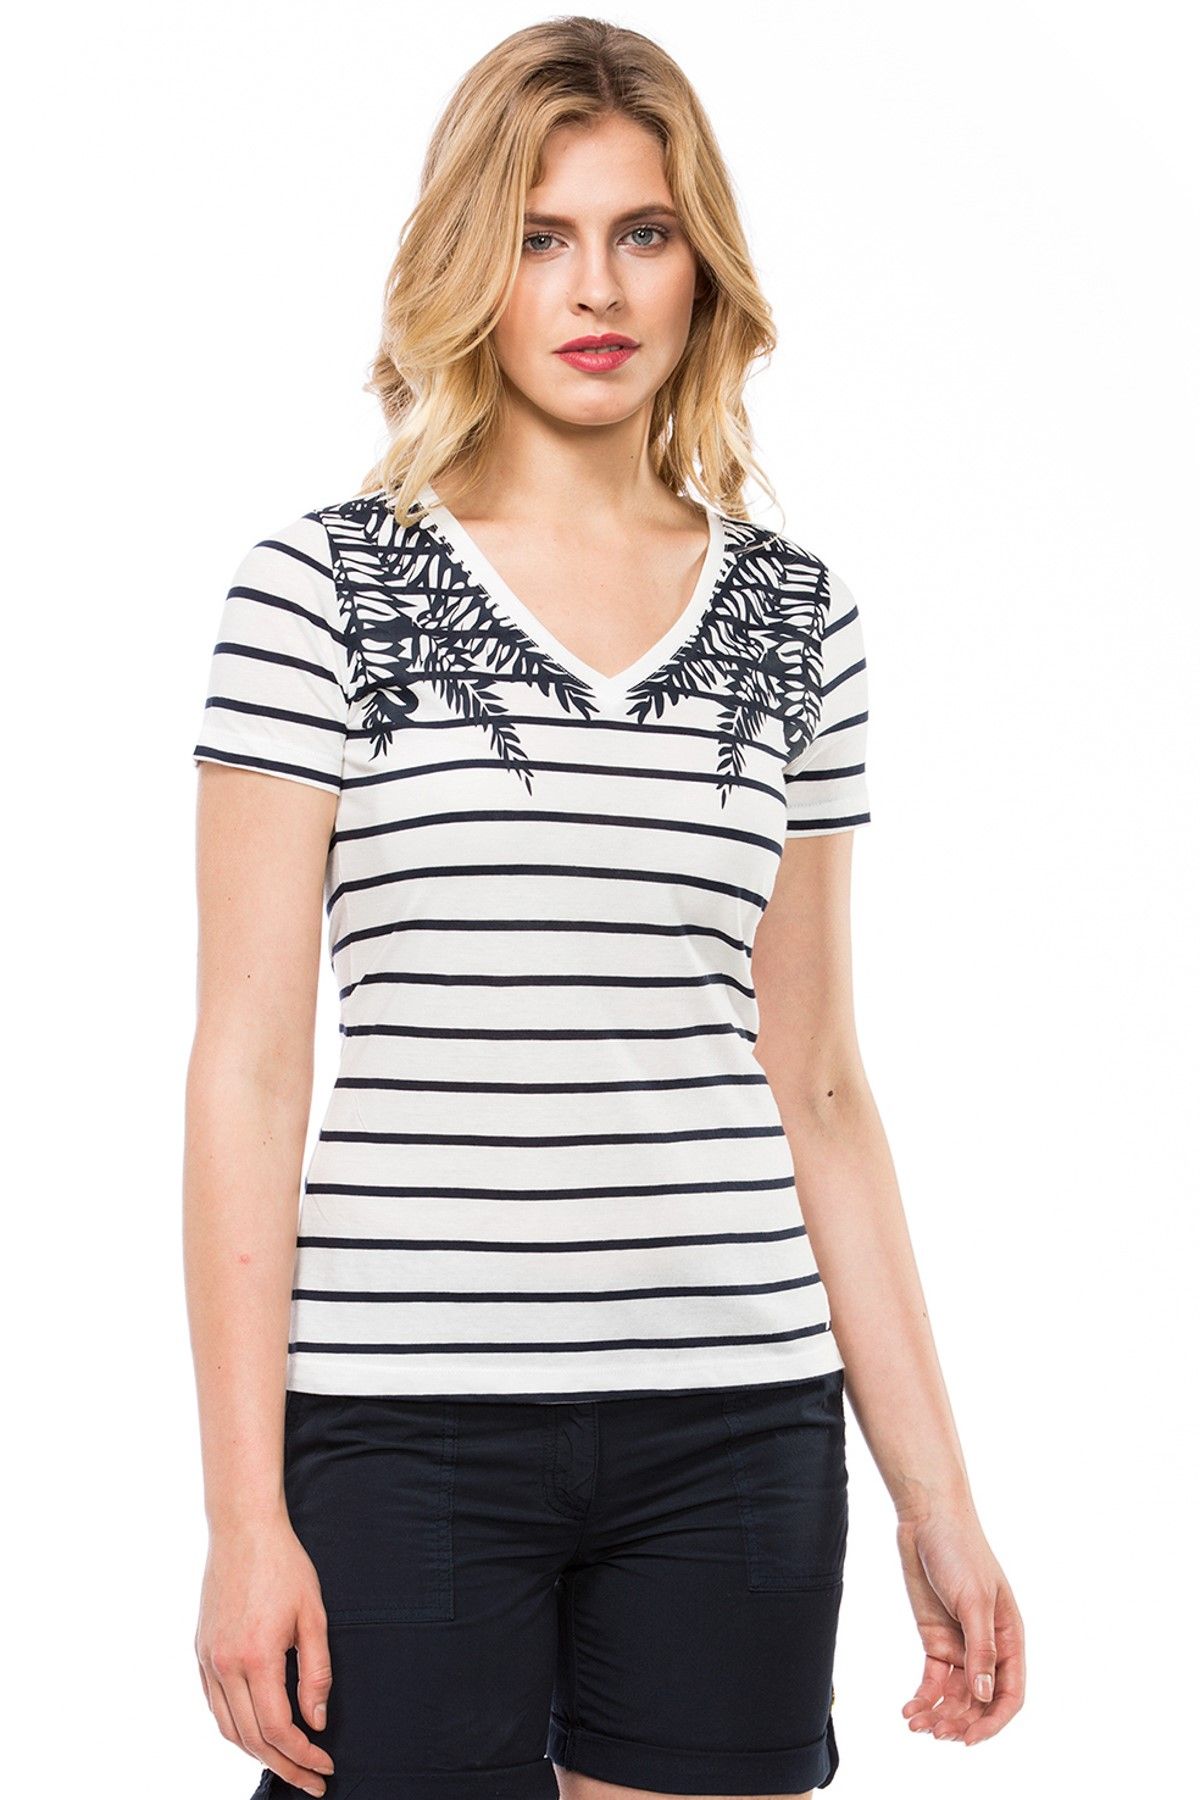 Nautica Kadın Siyah-Beyaz T-Shirt 519V203